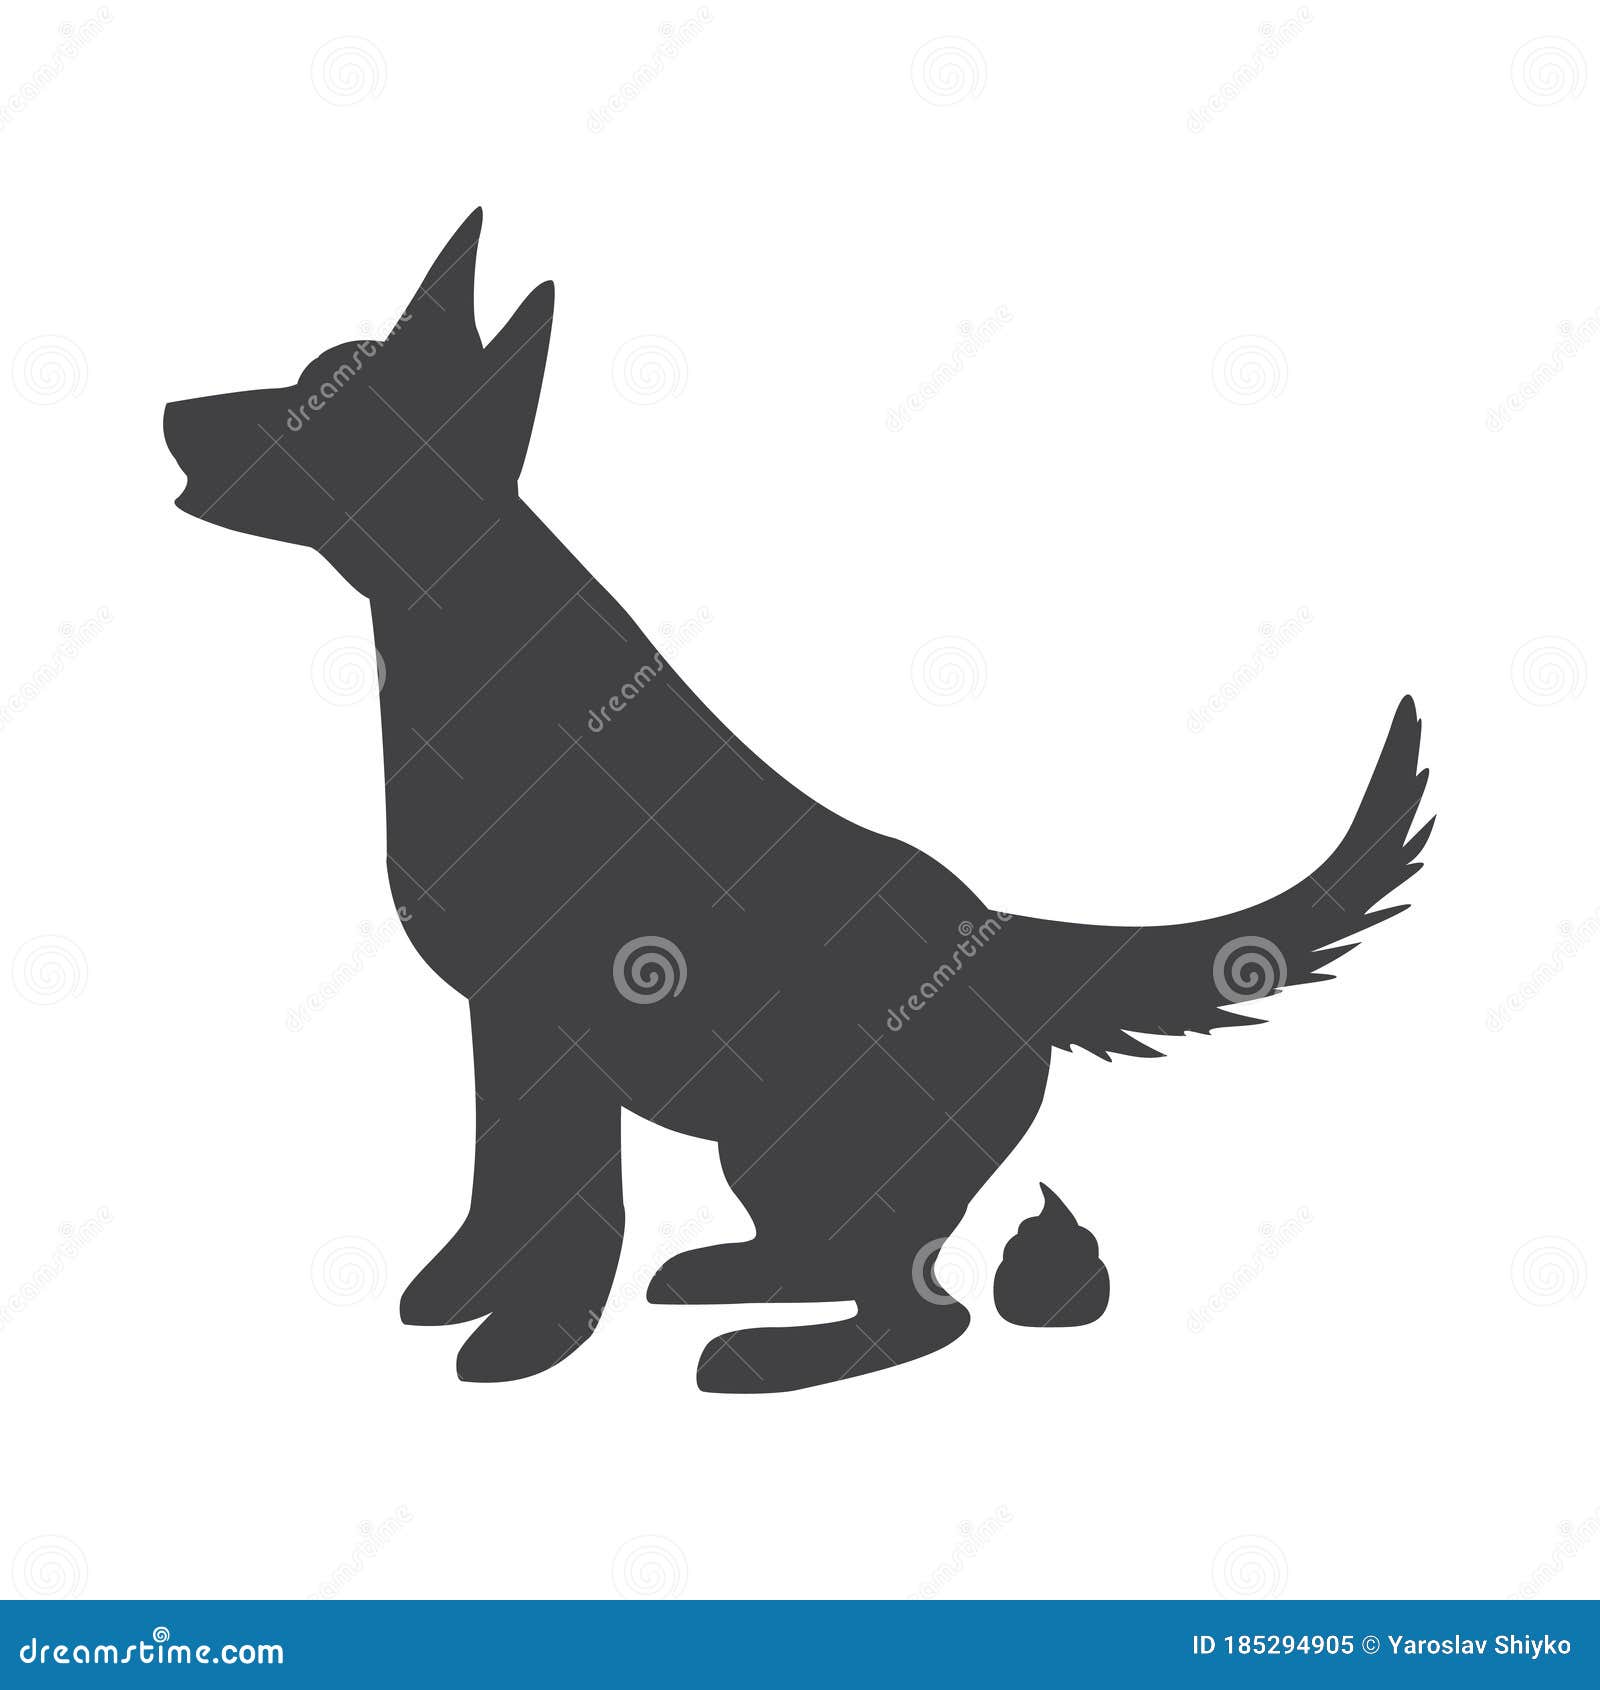 No Dog Pooping Warning Sign Cartoon Vector | CartoonDealer.com #107804251